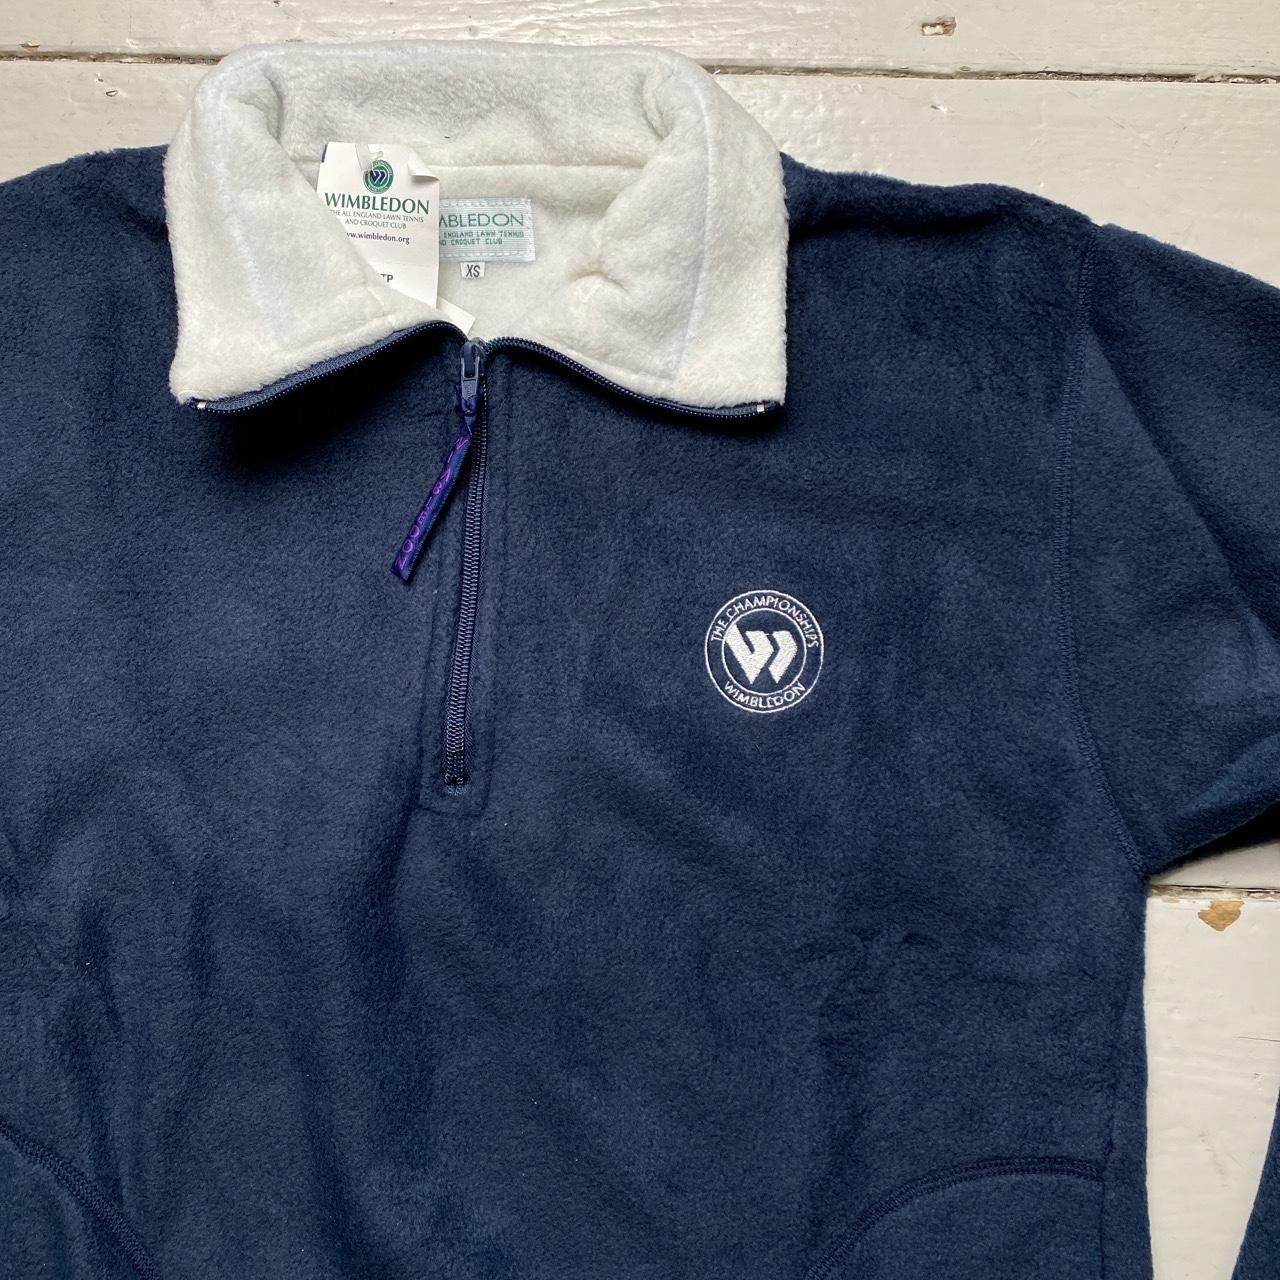 Wimbledon Vintage 90’s Fleece Quarter Zip Jumper Navy and White